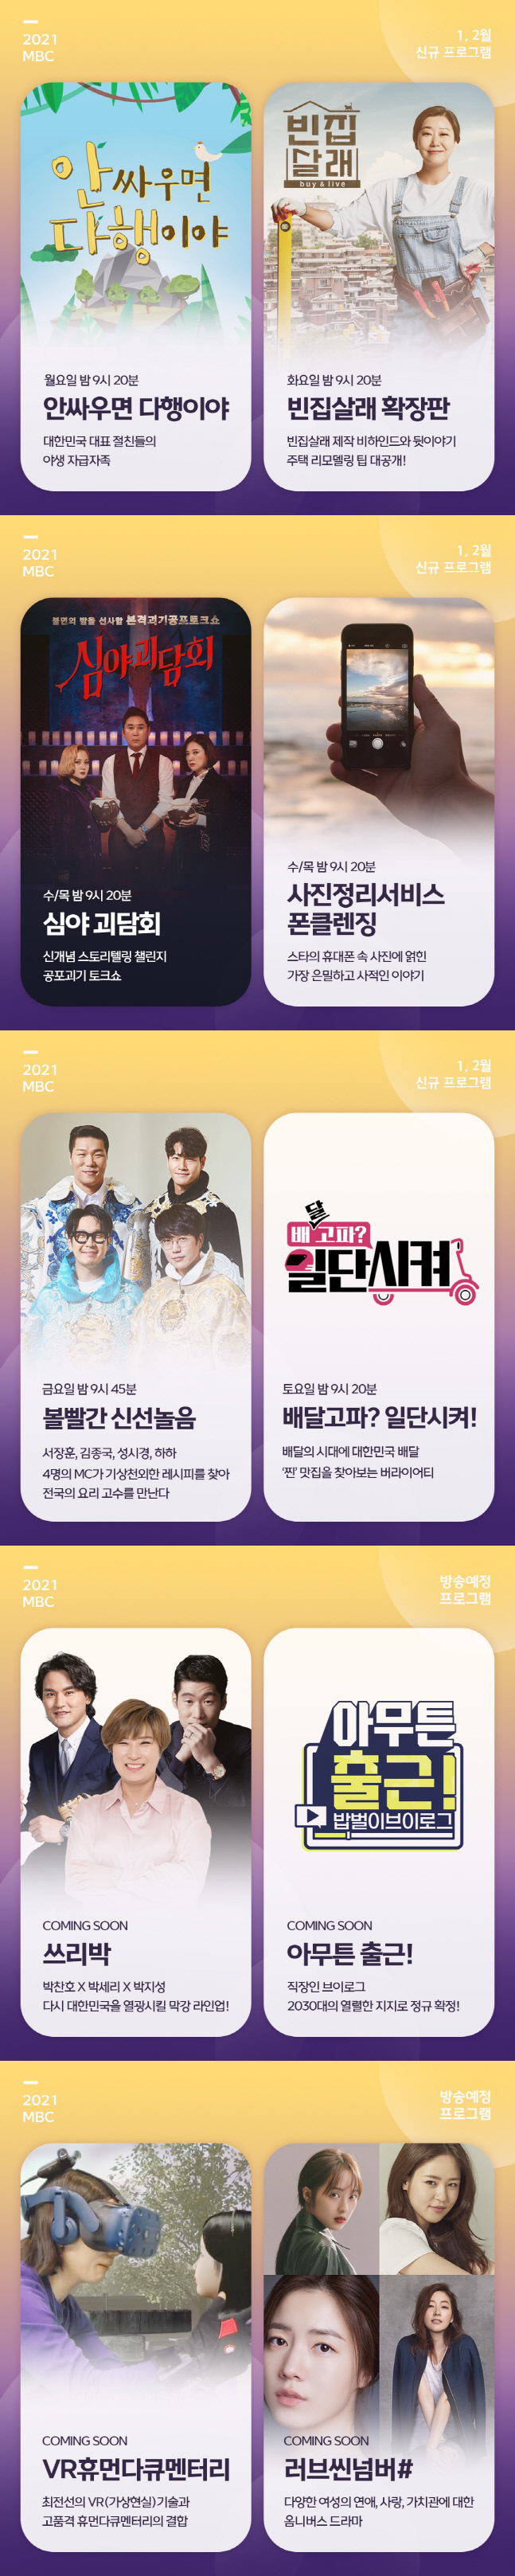 MBC_2021신규프로그램